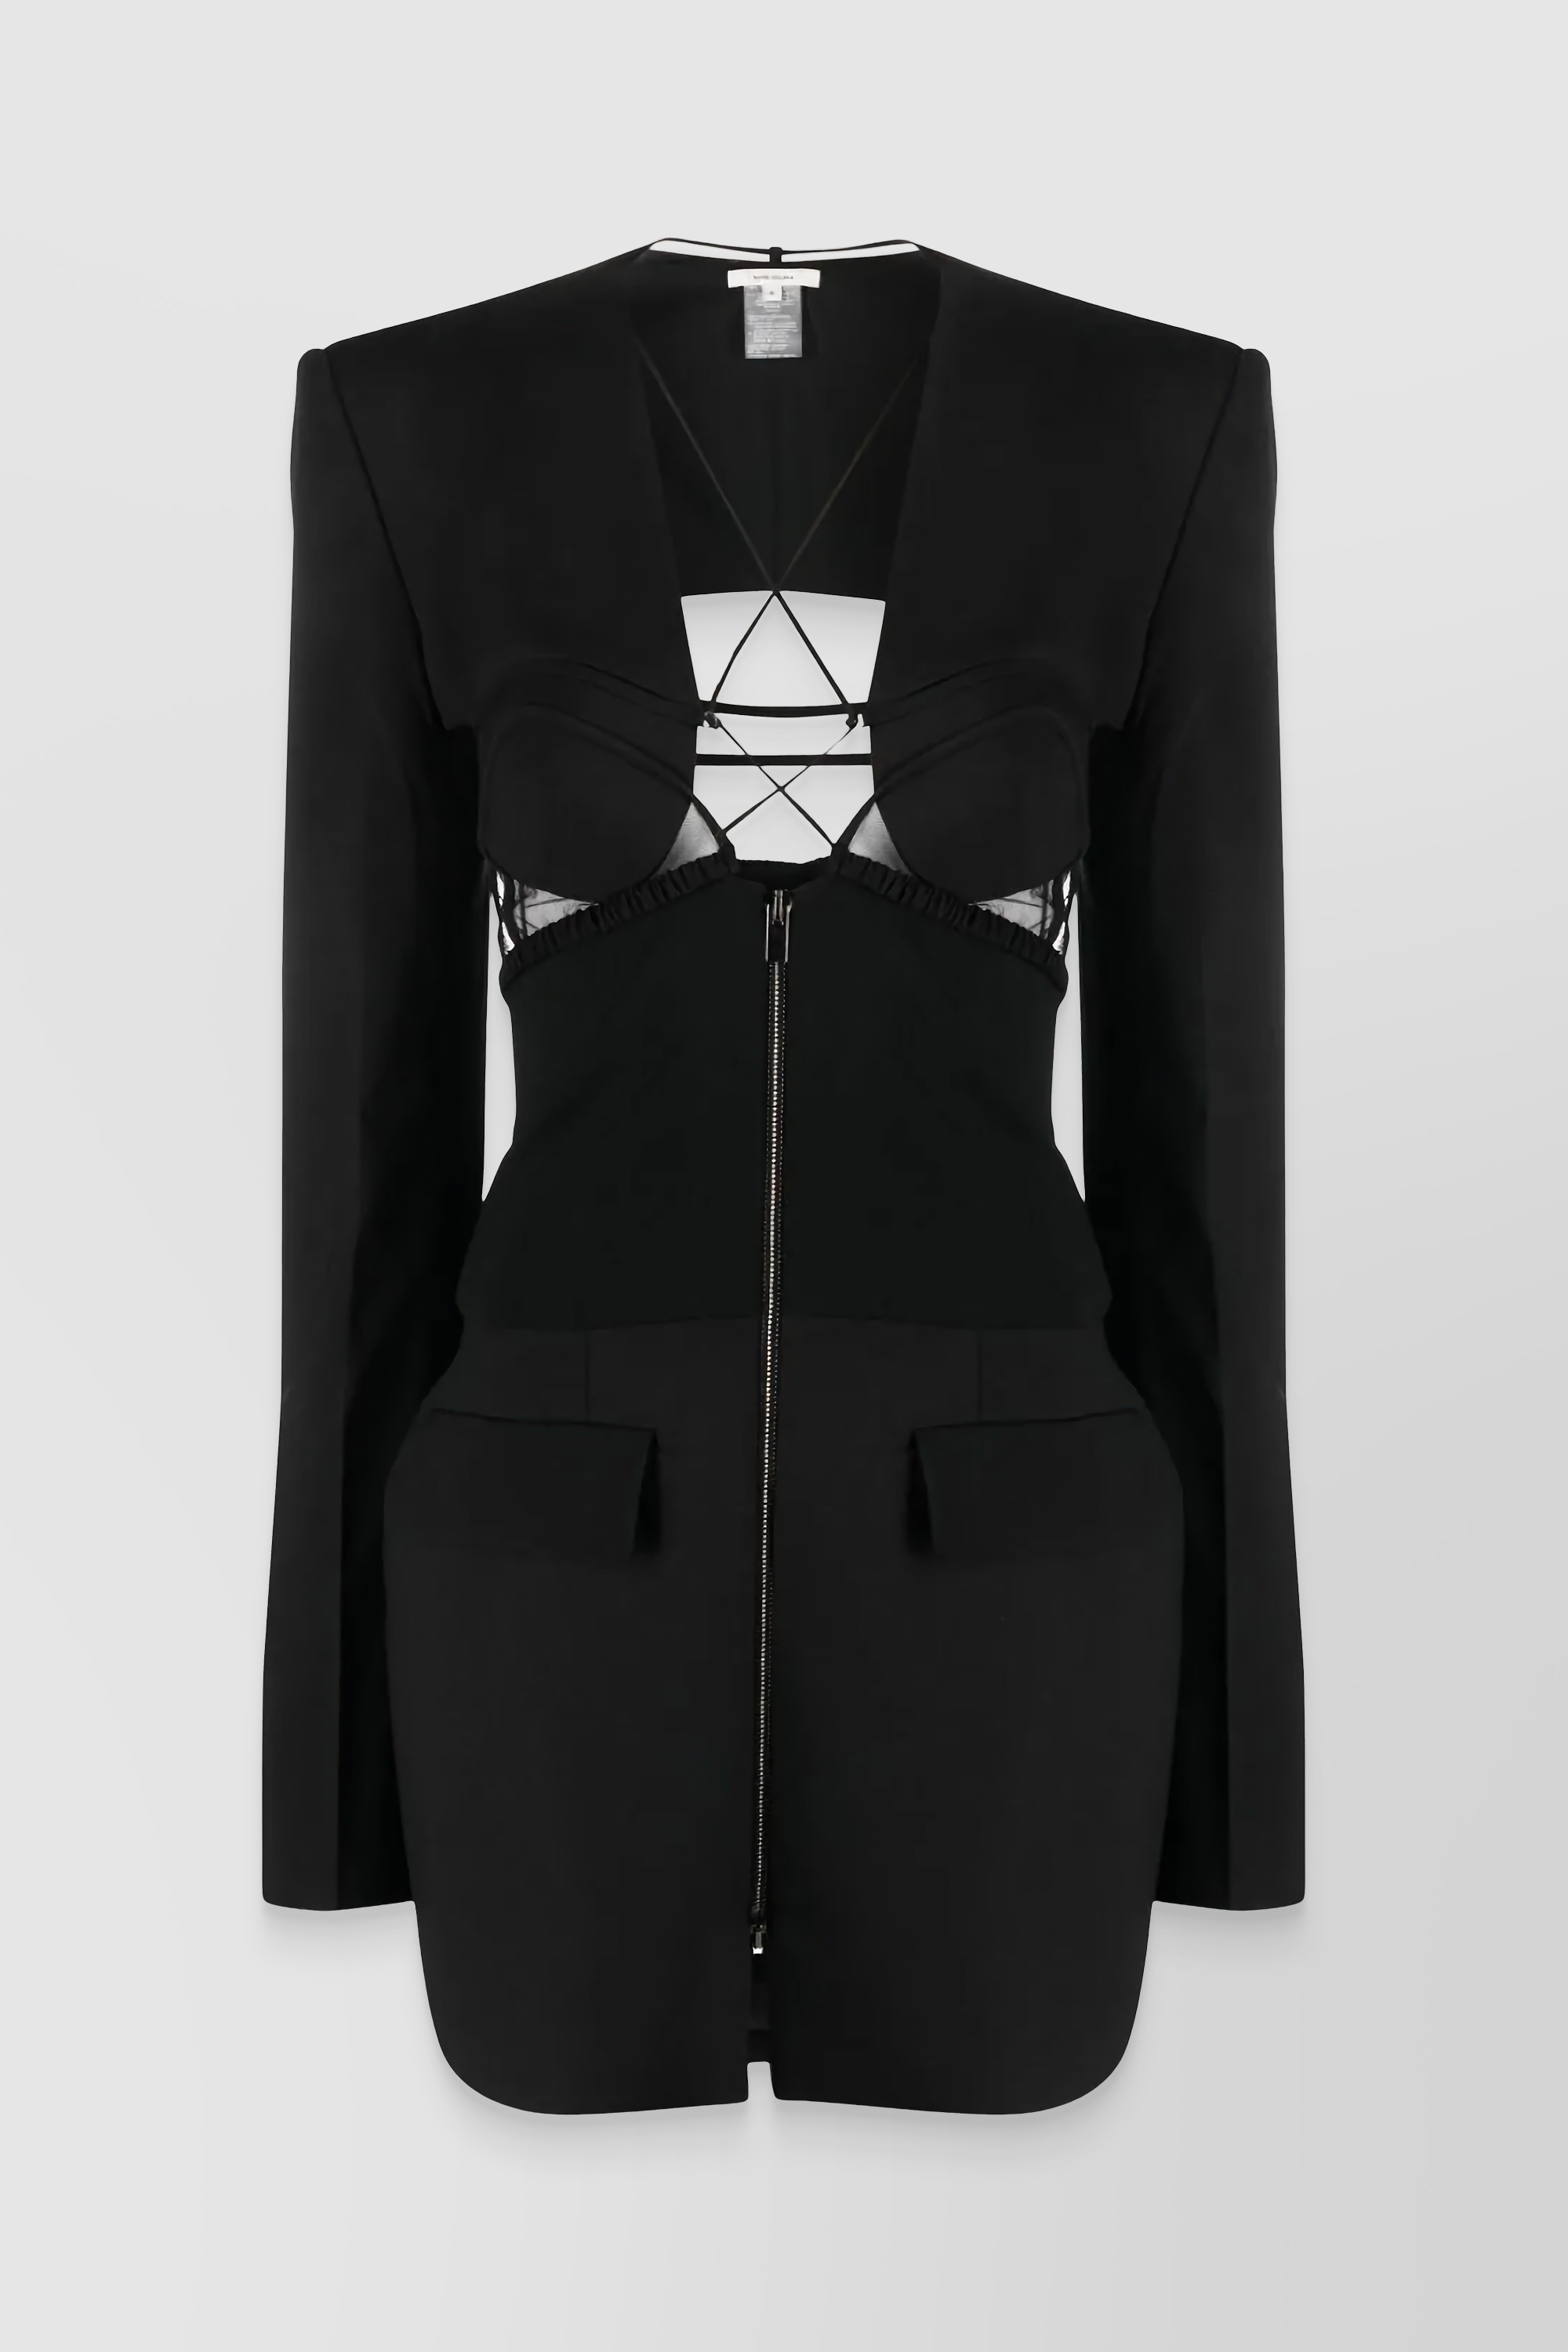 Nensi Dojaka Hybrid Tailoring Jacket With Bra Detail In Black